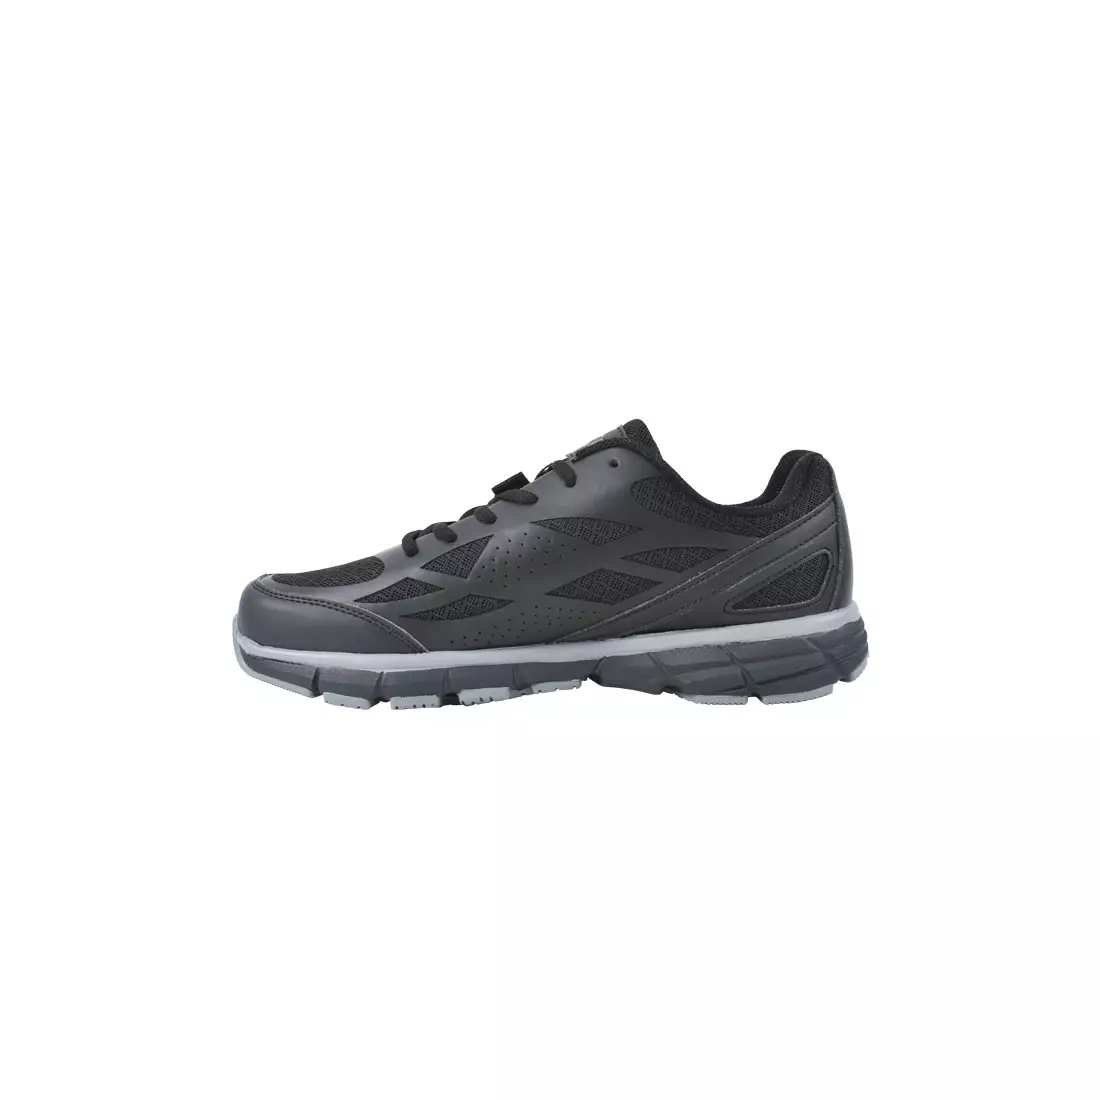 FLR cycling/sports shoes SPORT ENERGY black/grey